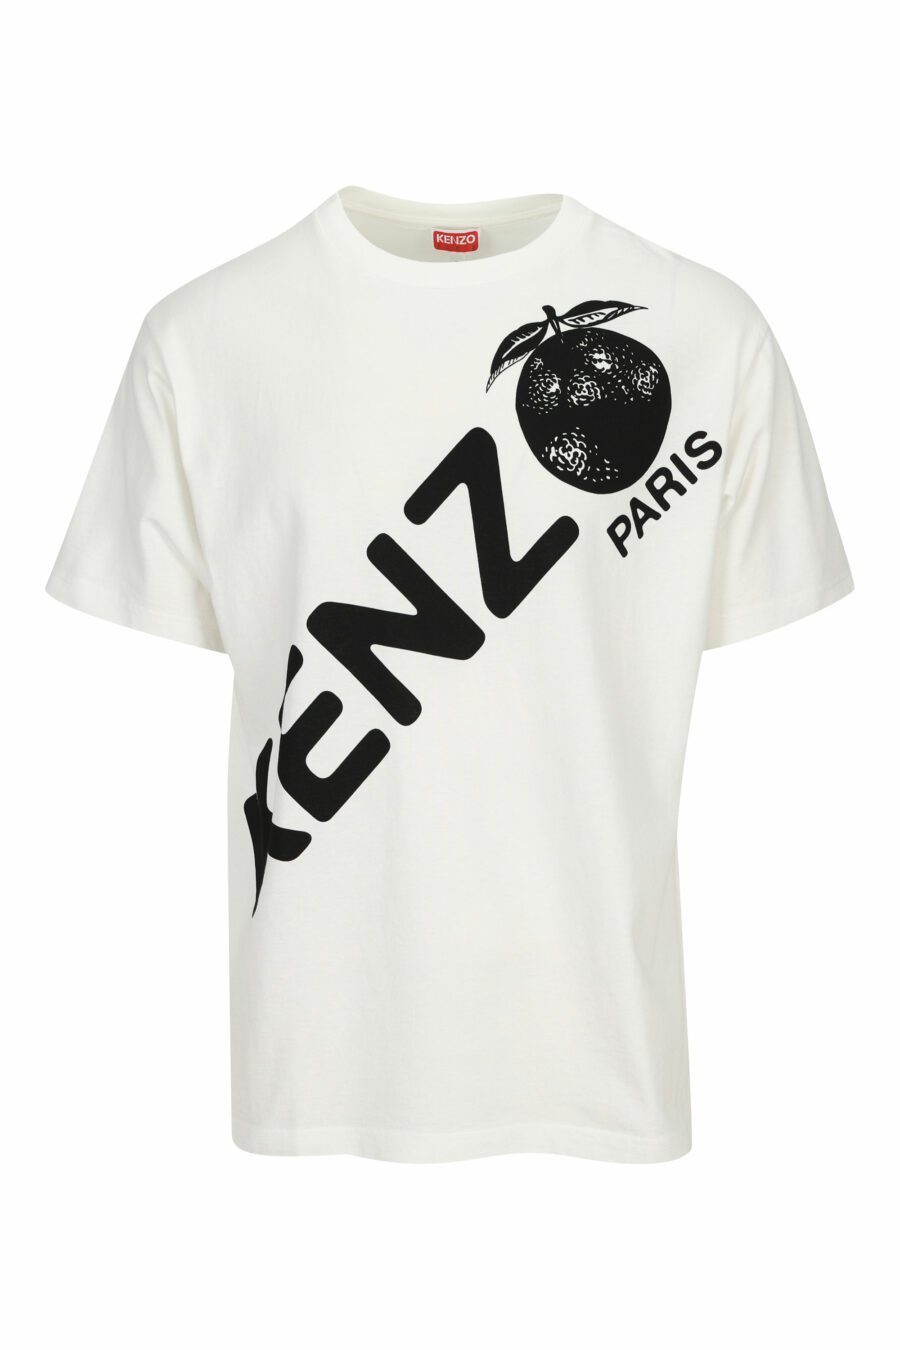 Weißes T-Shirt mit diagonalem Maxilogo "kenzo orange" - 3612230627000